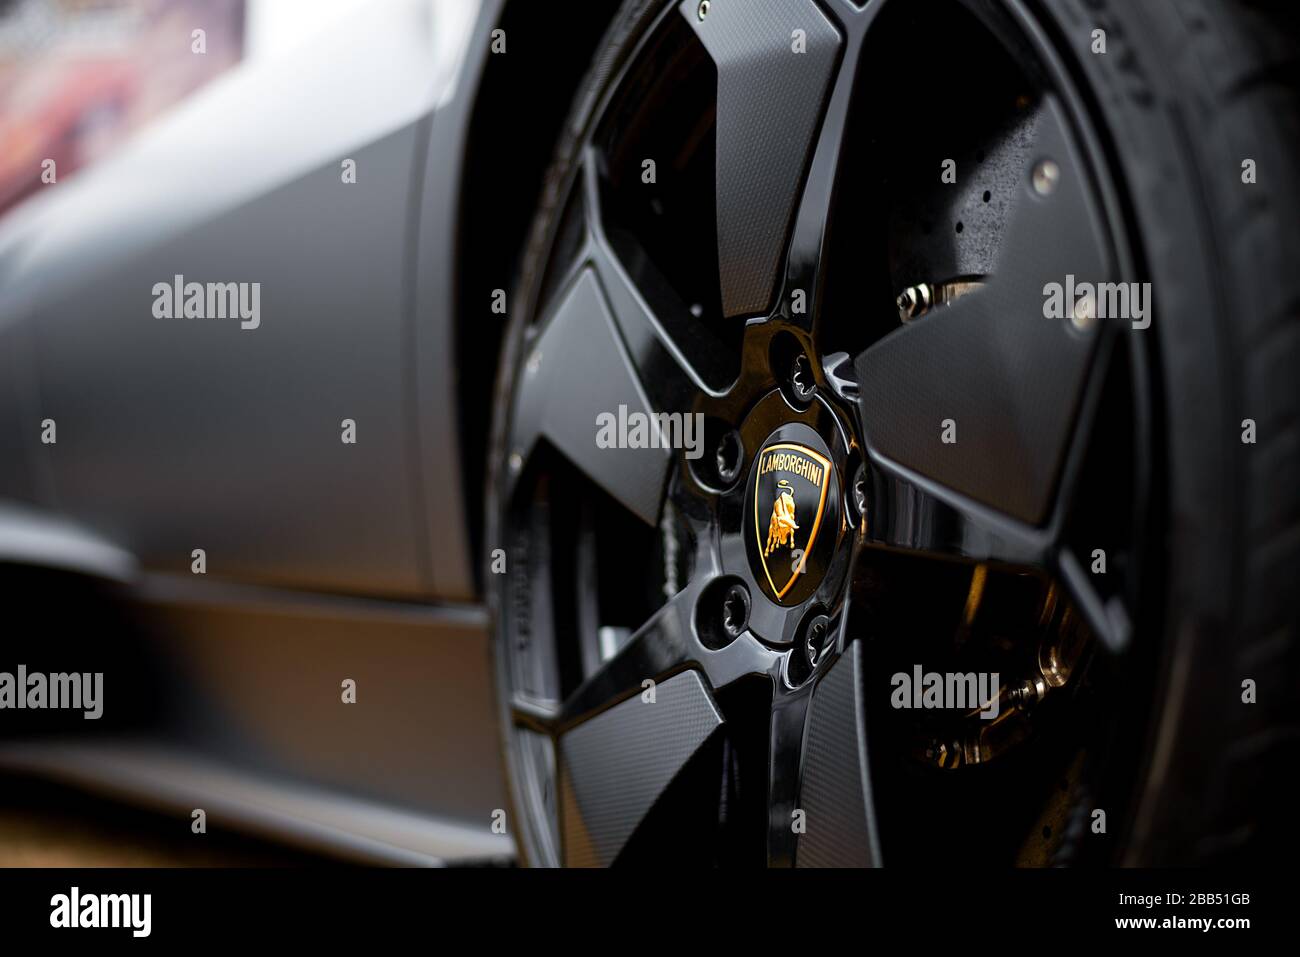 Close up of the Lamborghini badge on the impressive front wheel of a matt black Lamborghini Huracan super car. Stock Photo